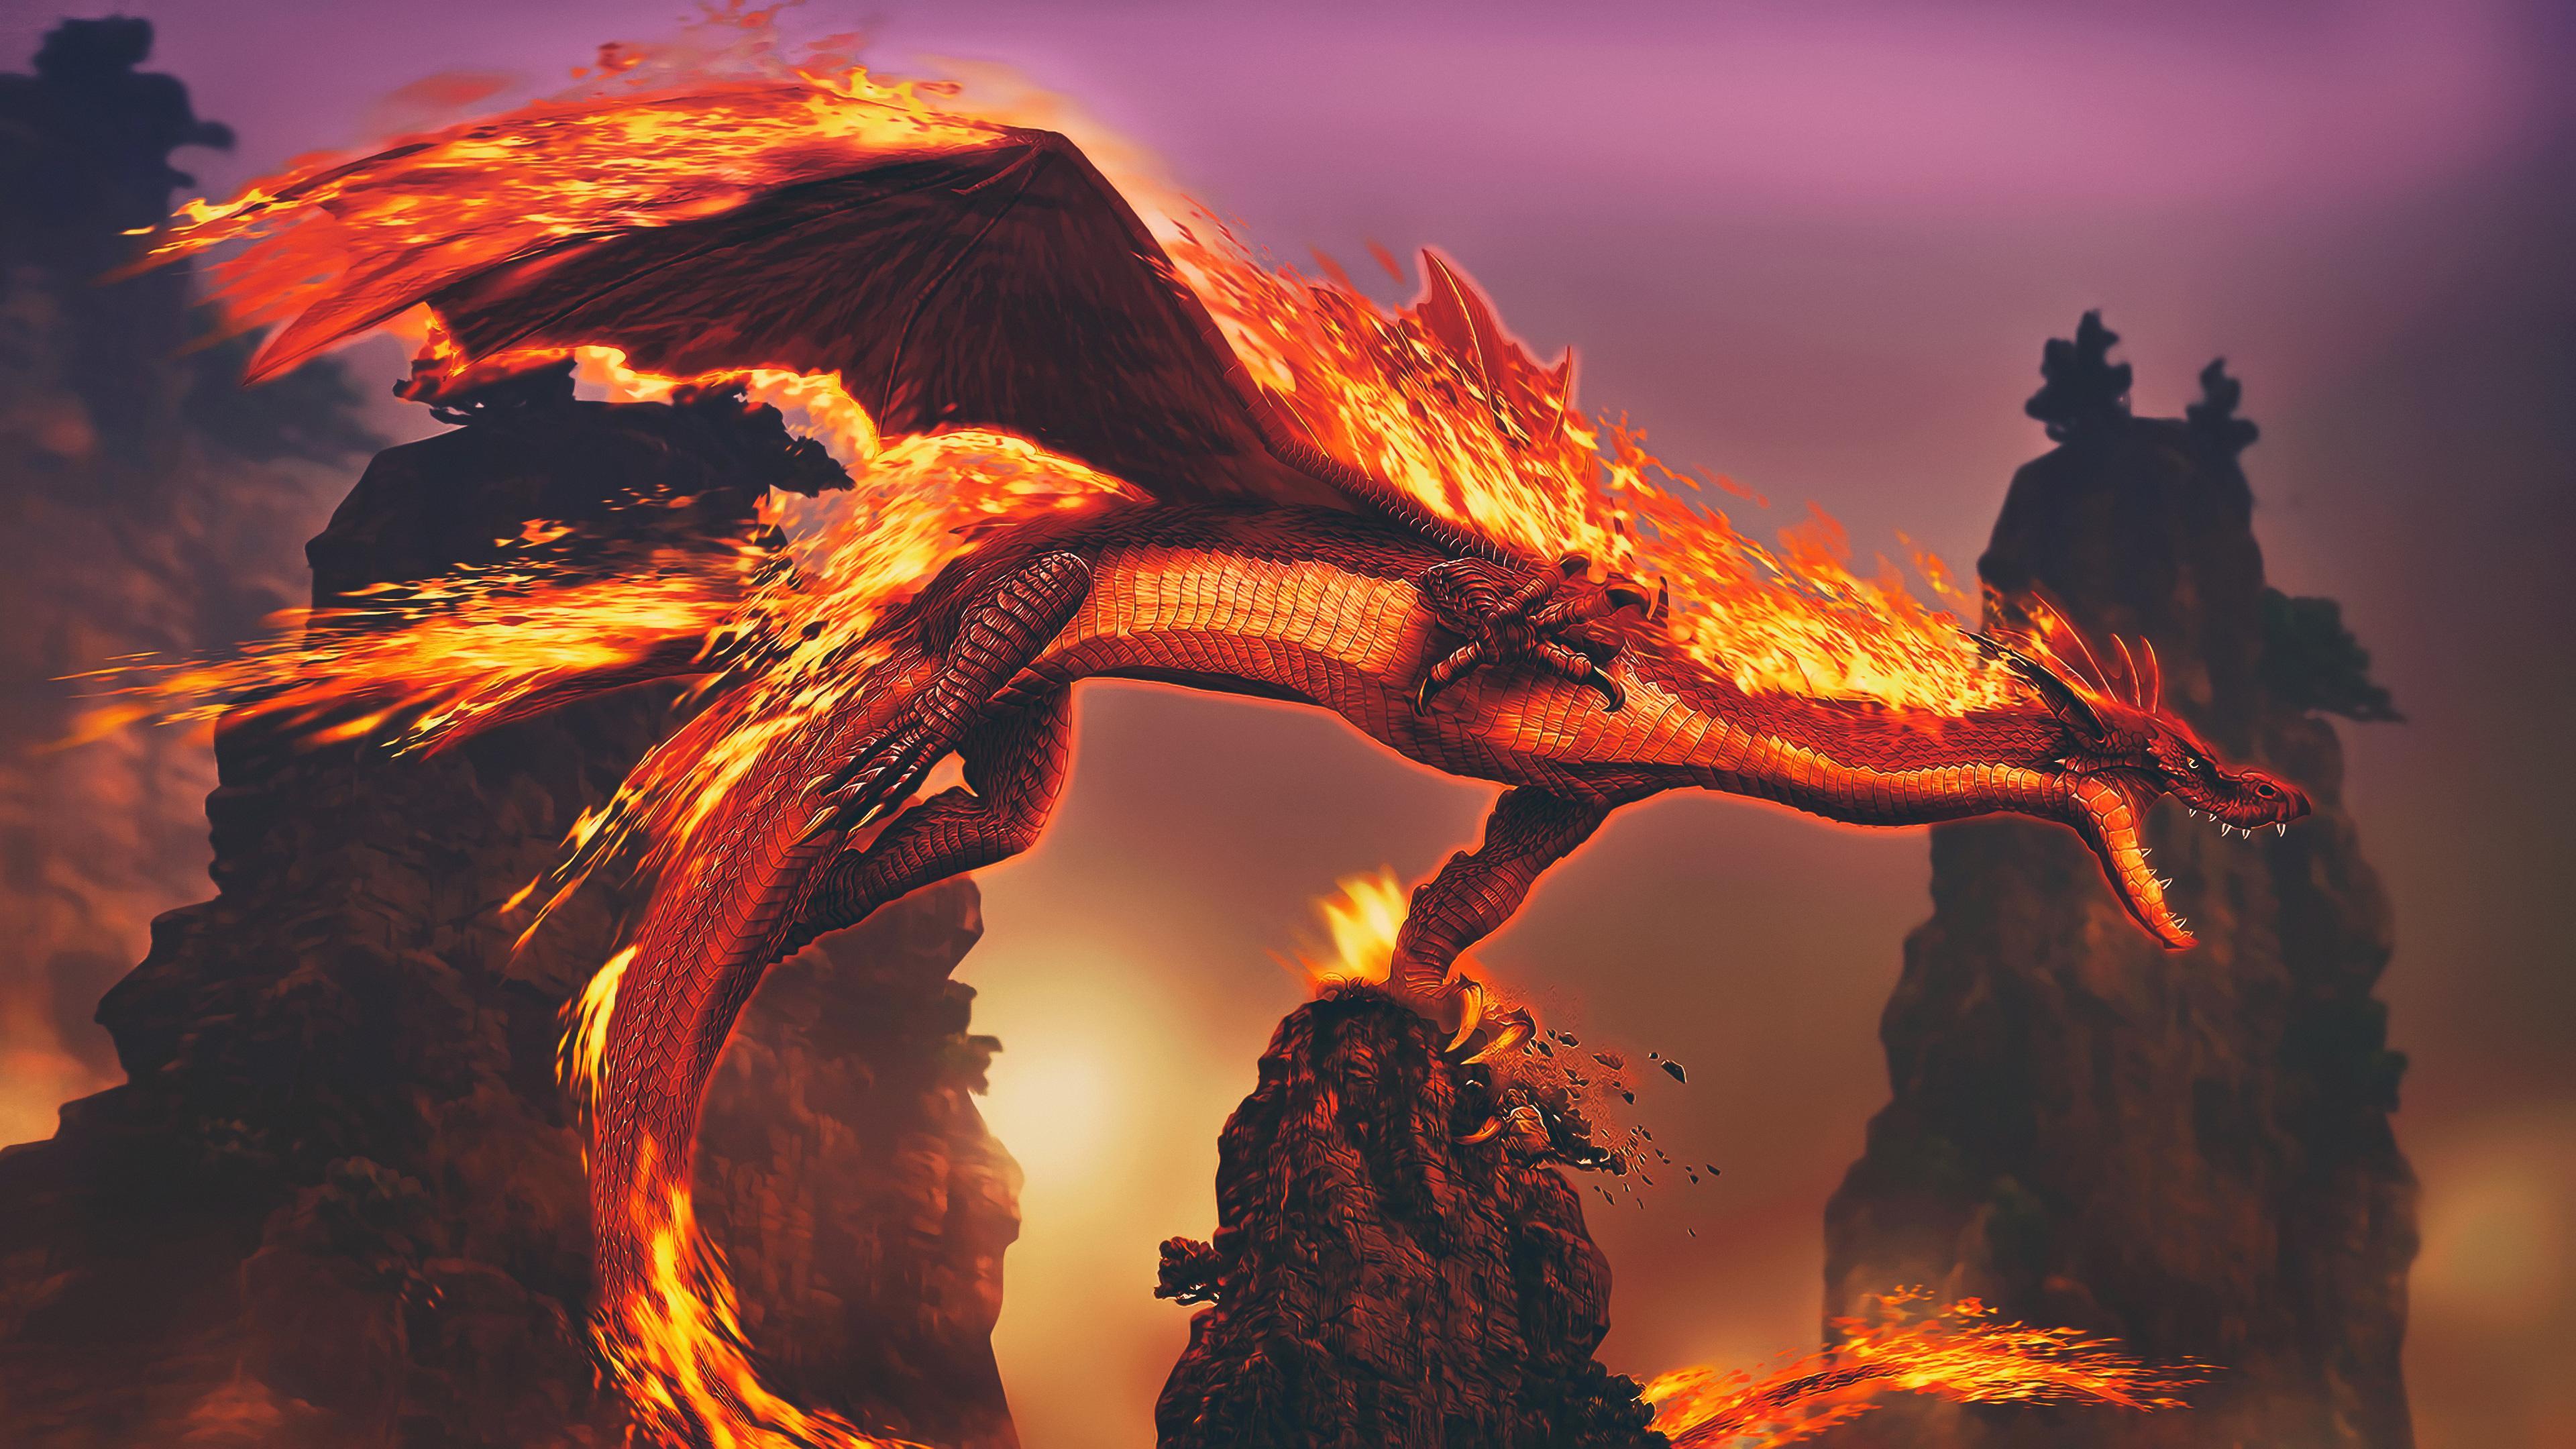 Dragon Fire 4k, HD Artist, 4k Wallpaper, Image